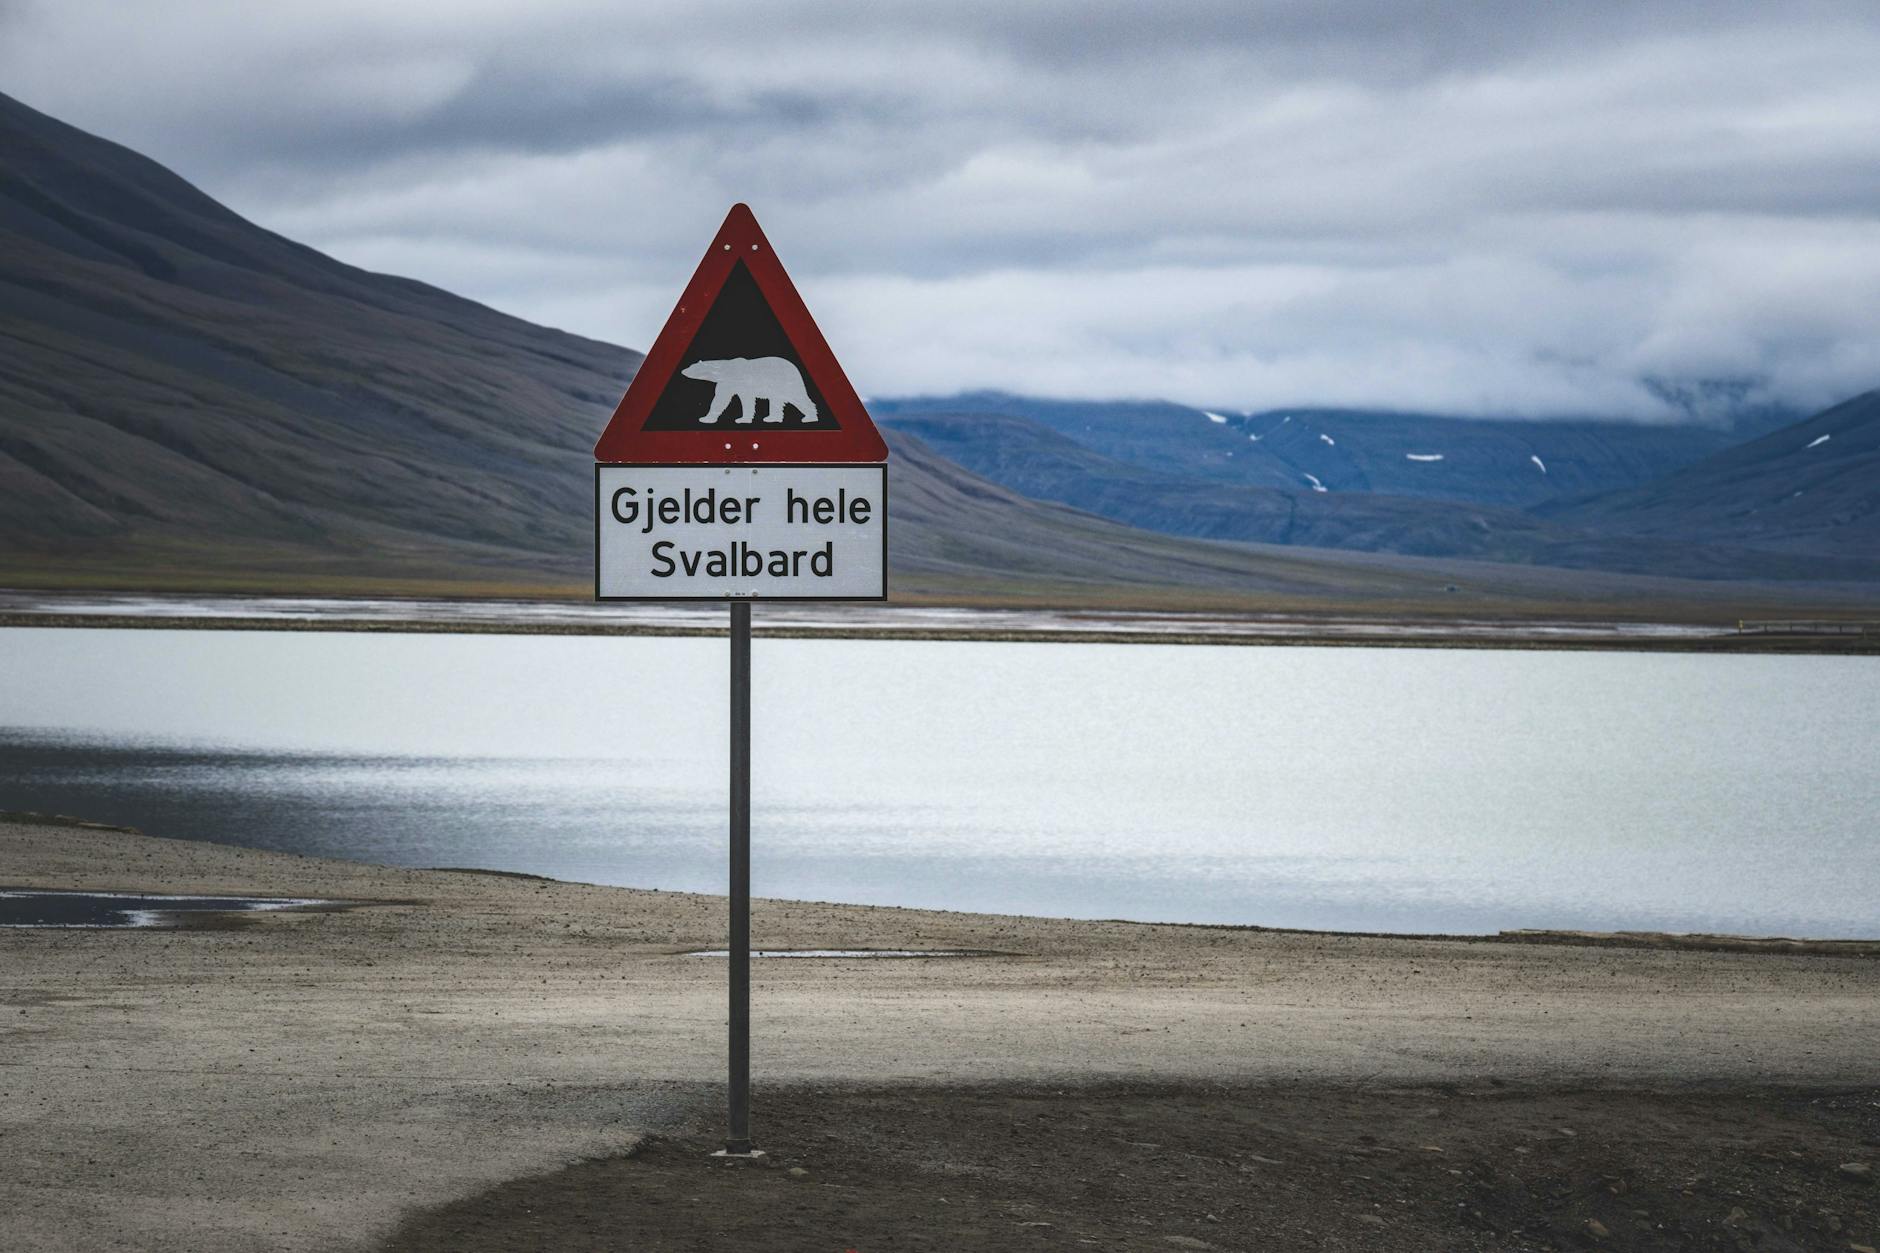 polar bear on warning sign on svalbard island in norway